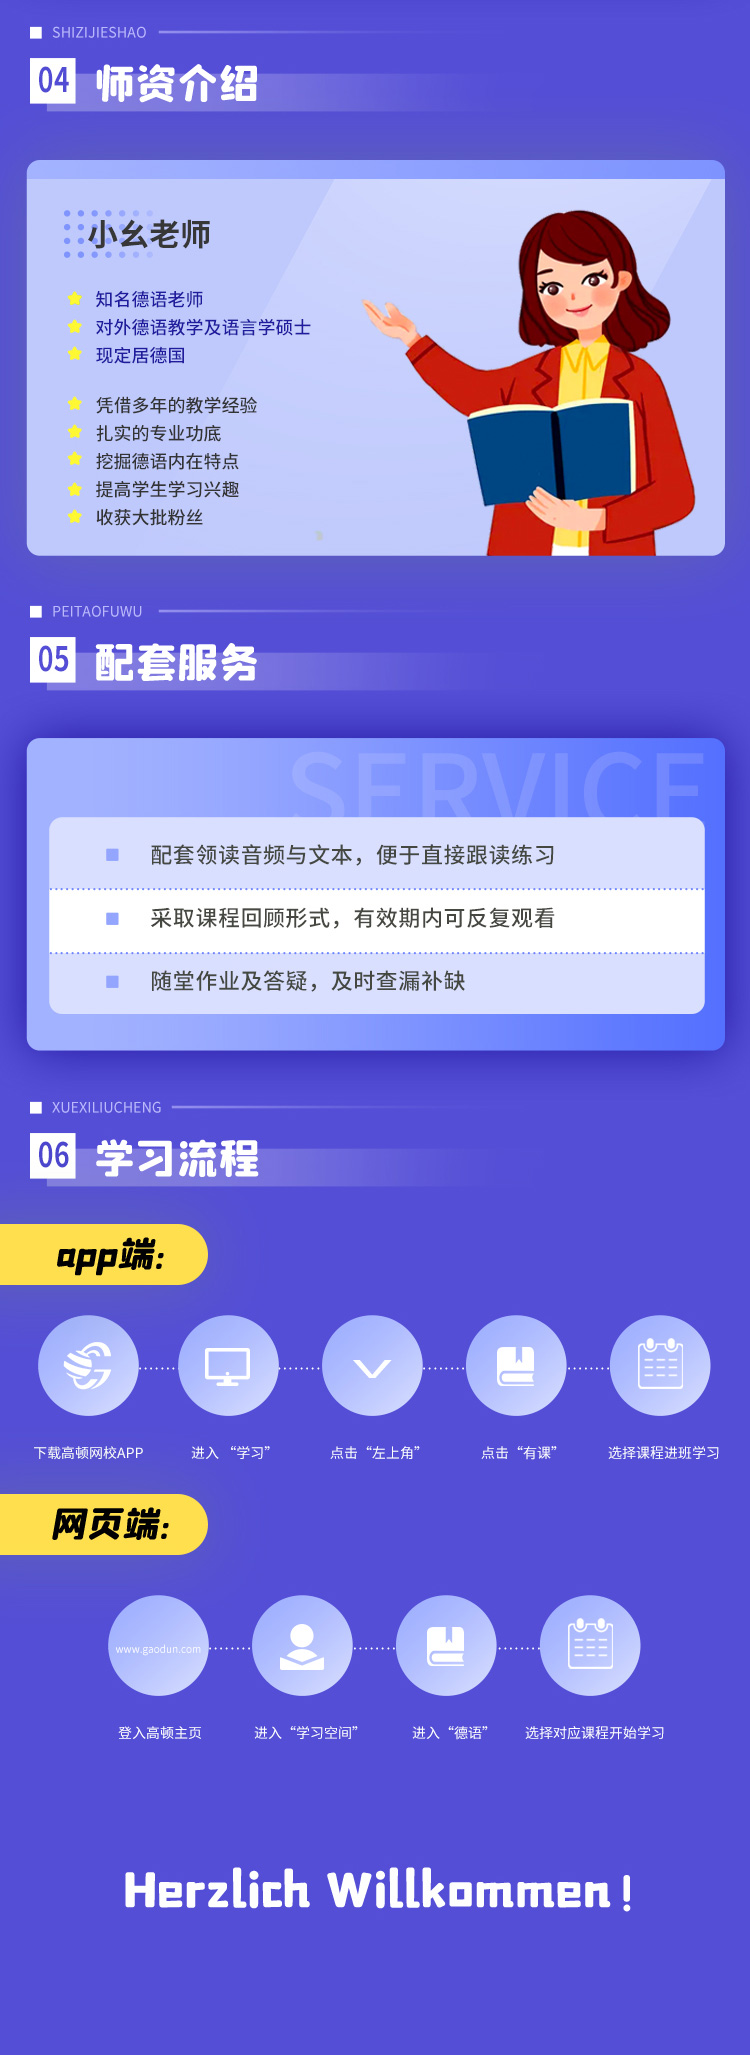 https://simg01.gaodunwangxiao.com/uploadfiles/product-center/202208/29/b5832_20220829094727.jpg